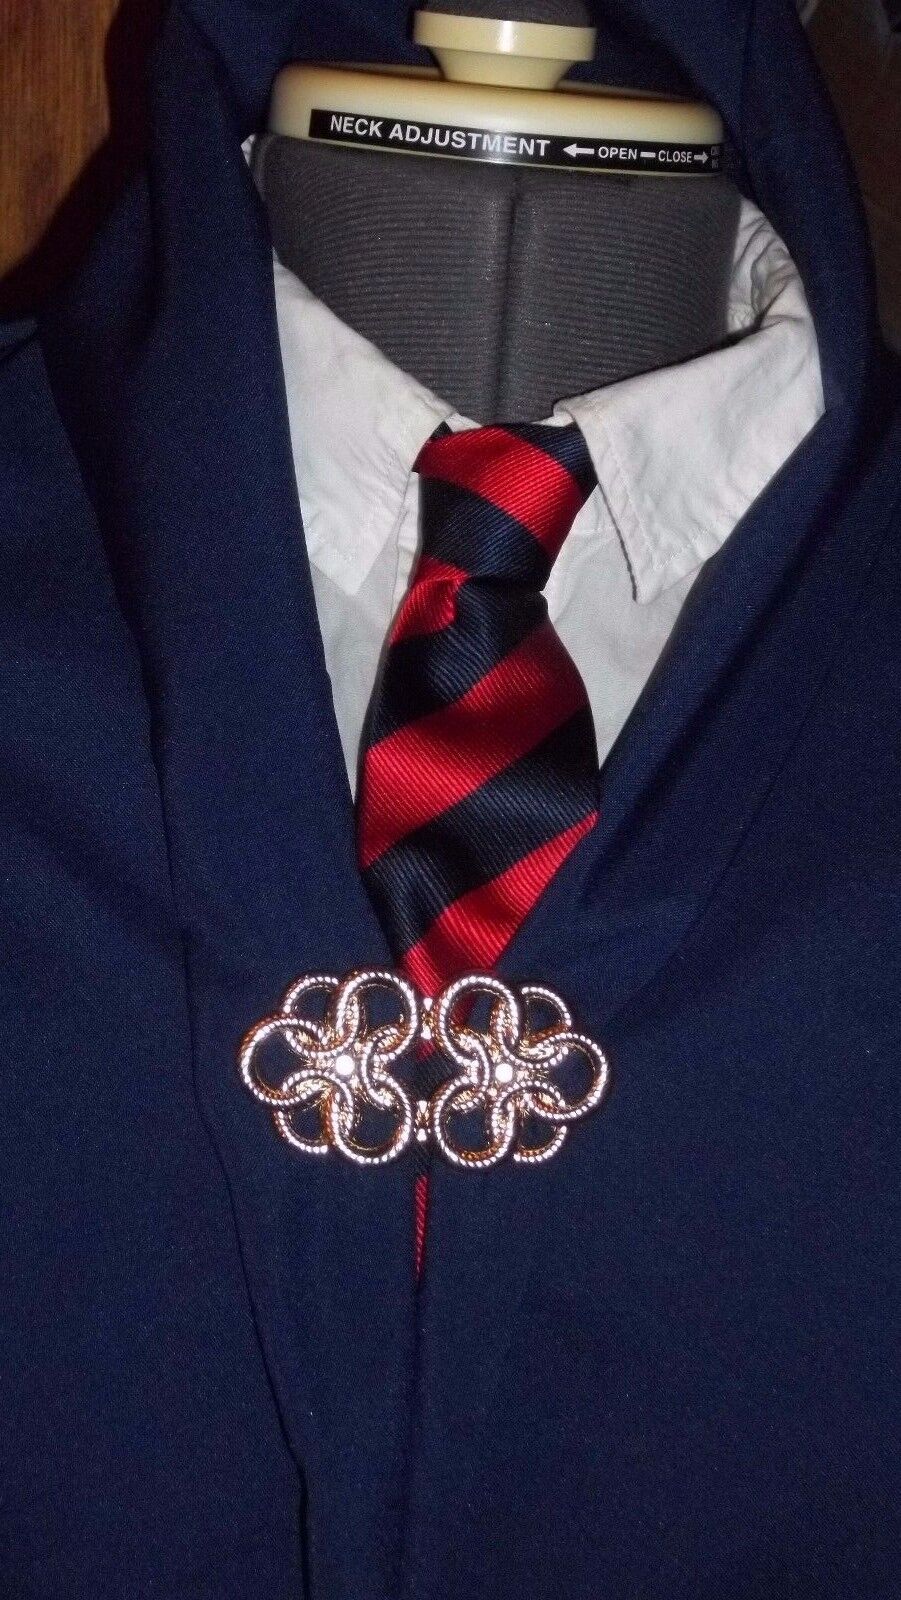 Ilvermorny School Uniform "costume Tie" Cranberry Red, Navy Blue Striped Necktie